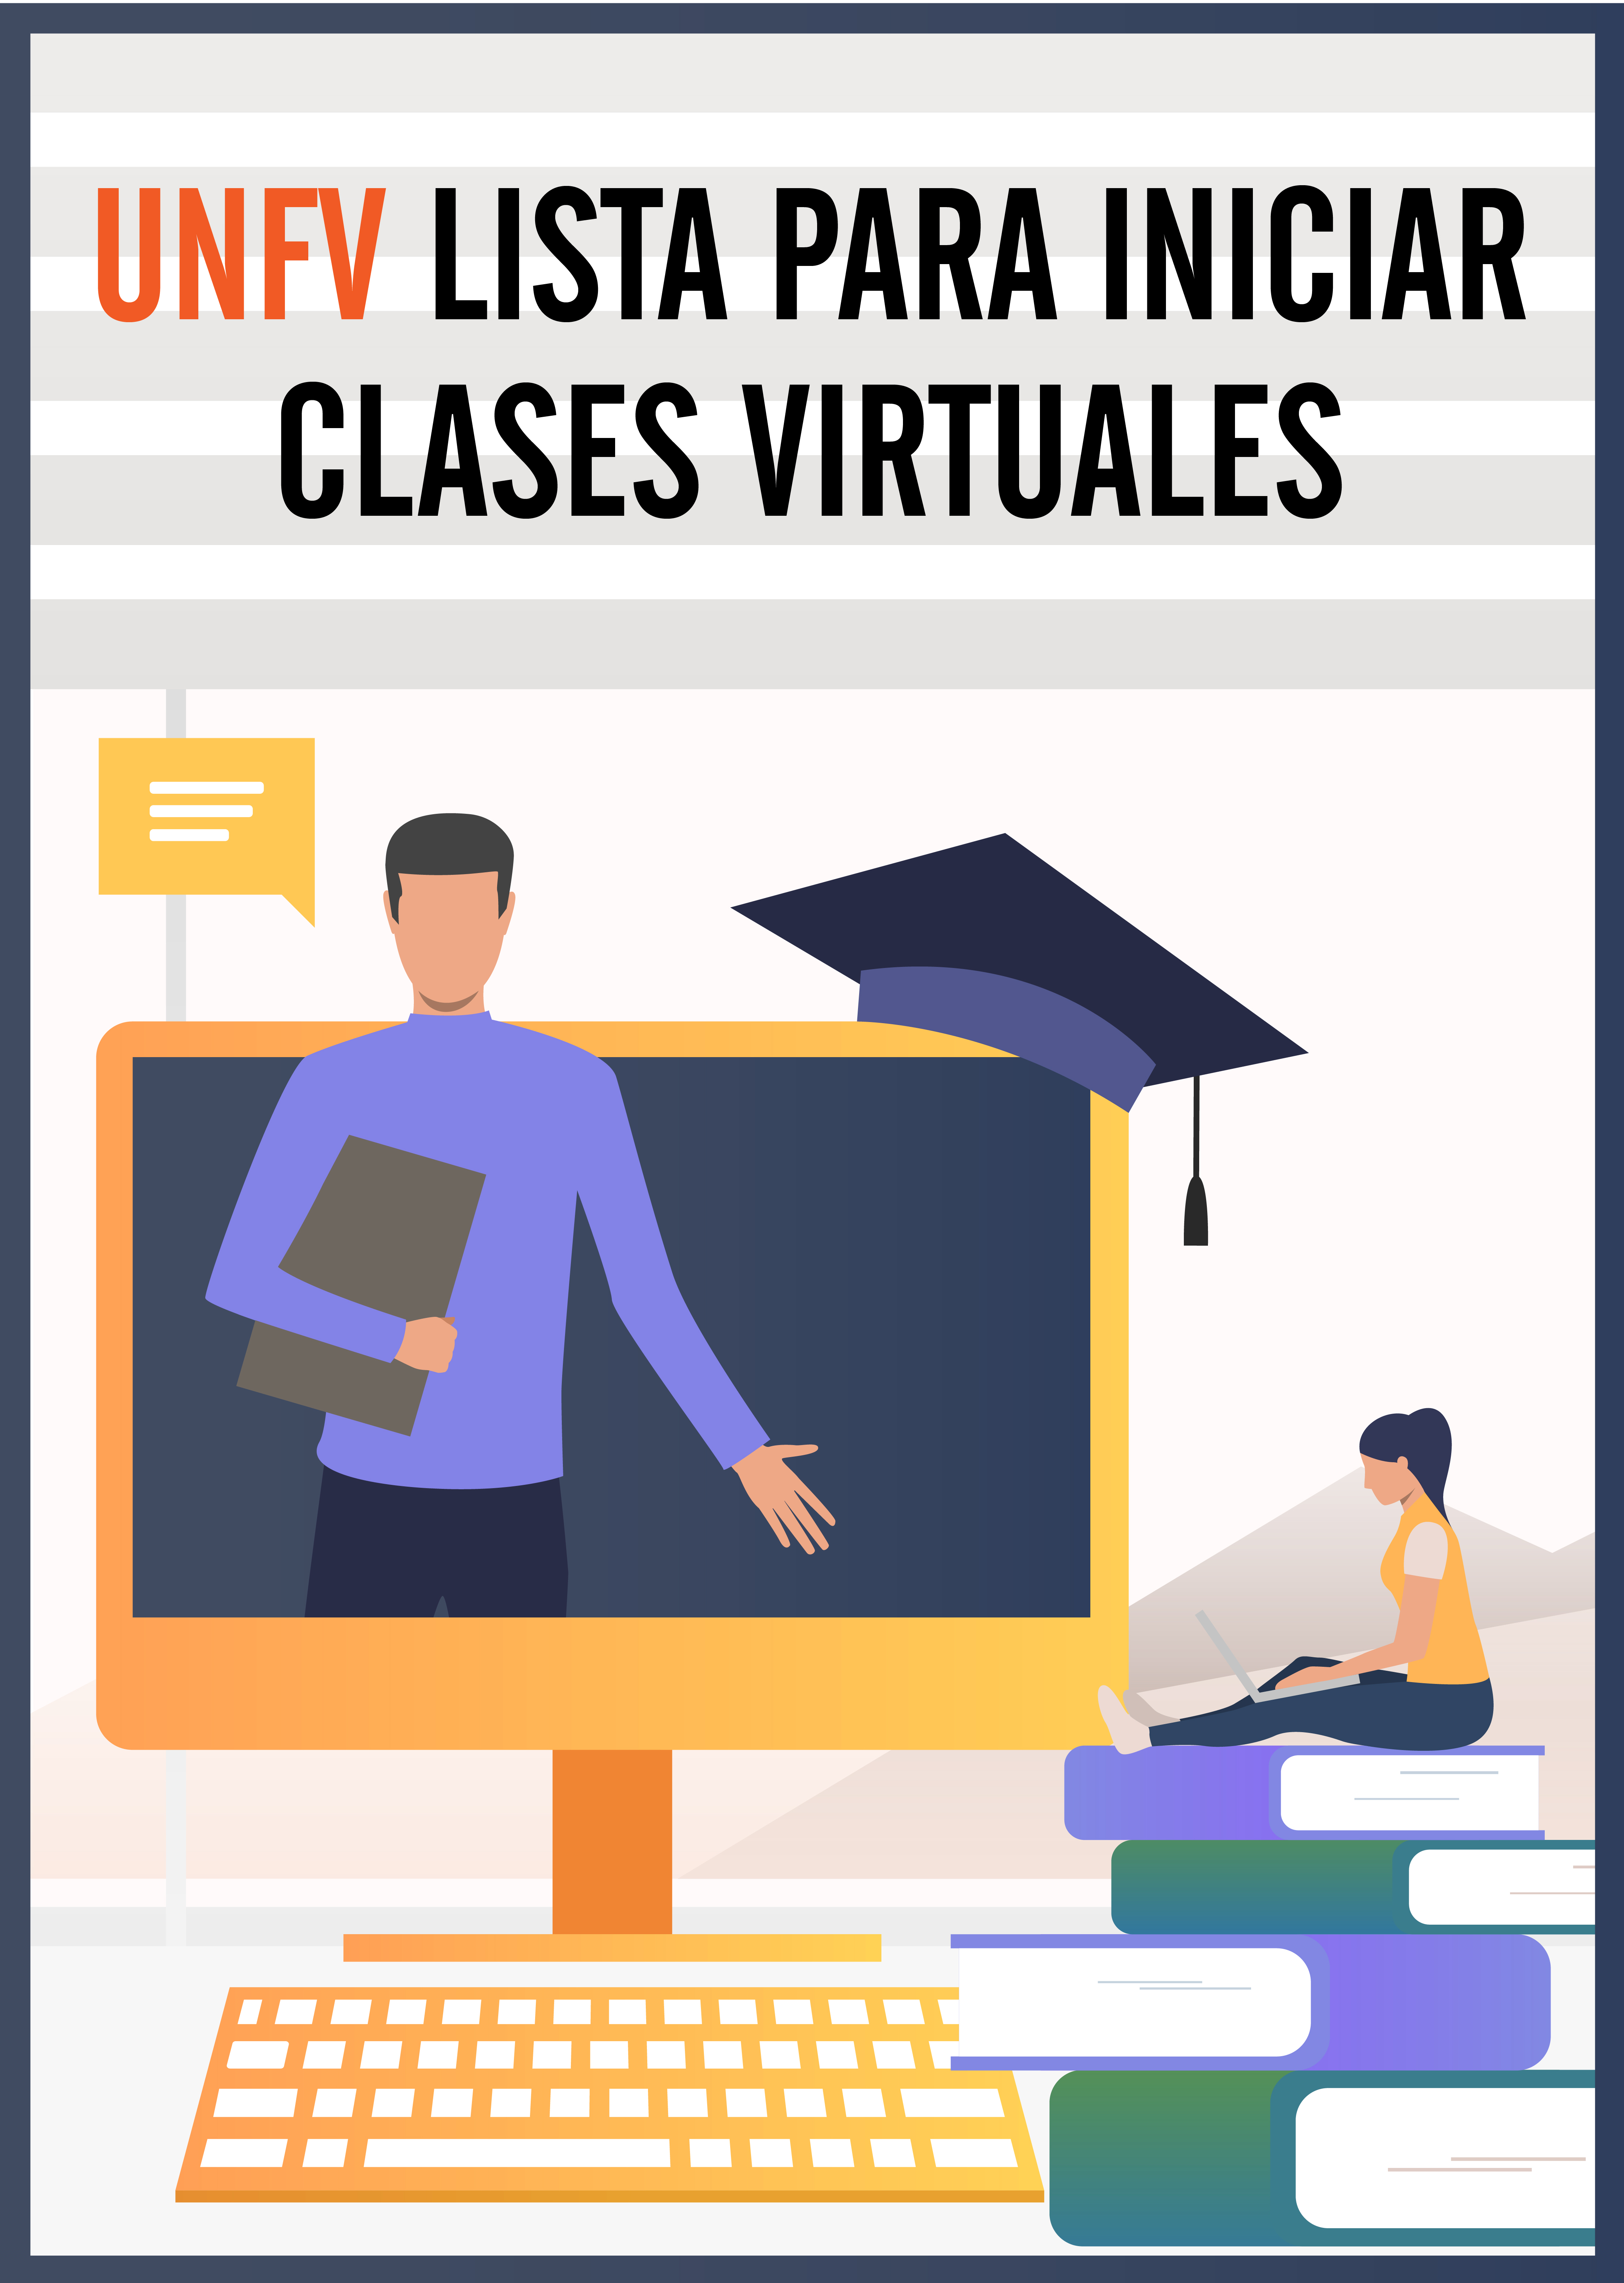 UNFV lista para clases virtuales